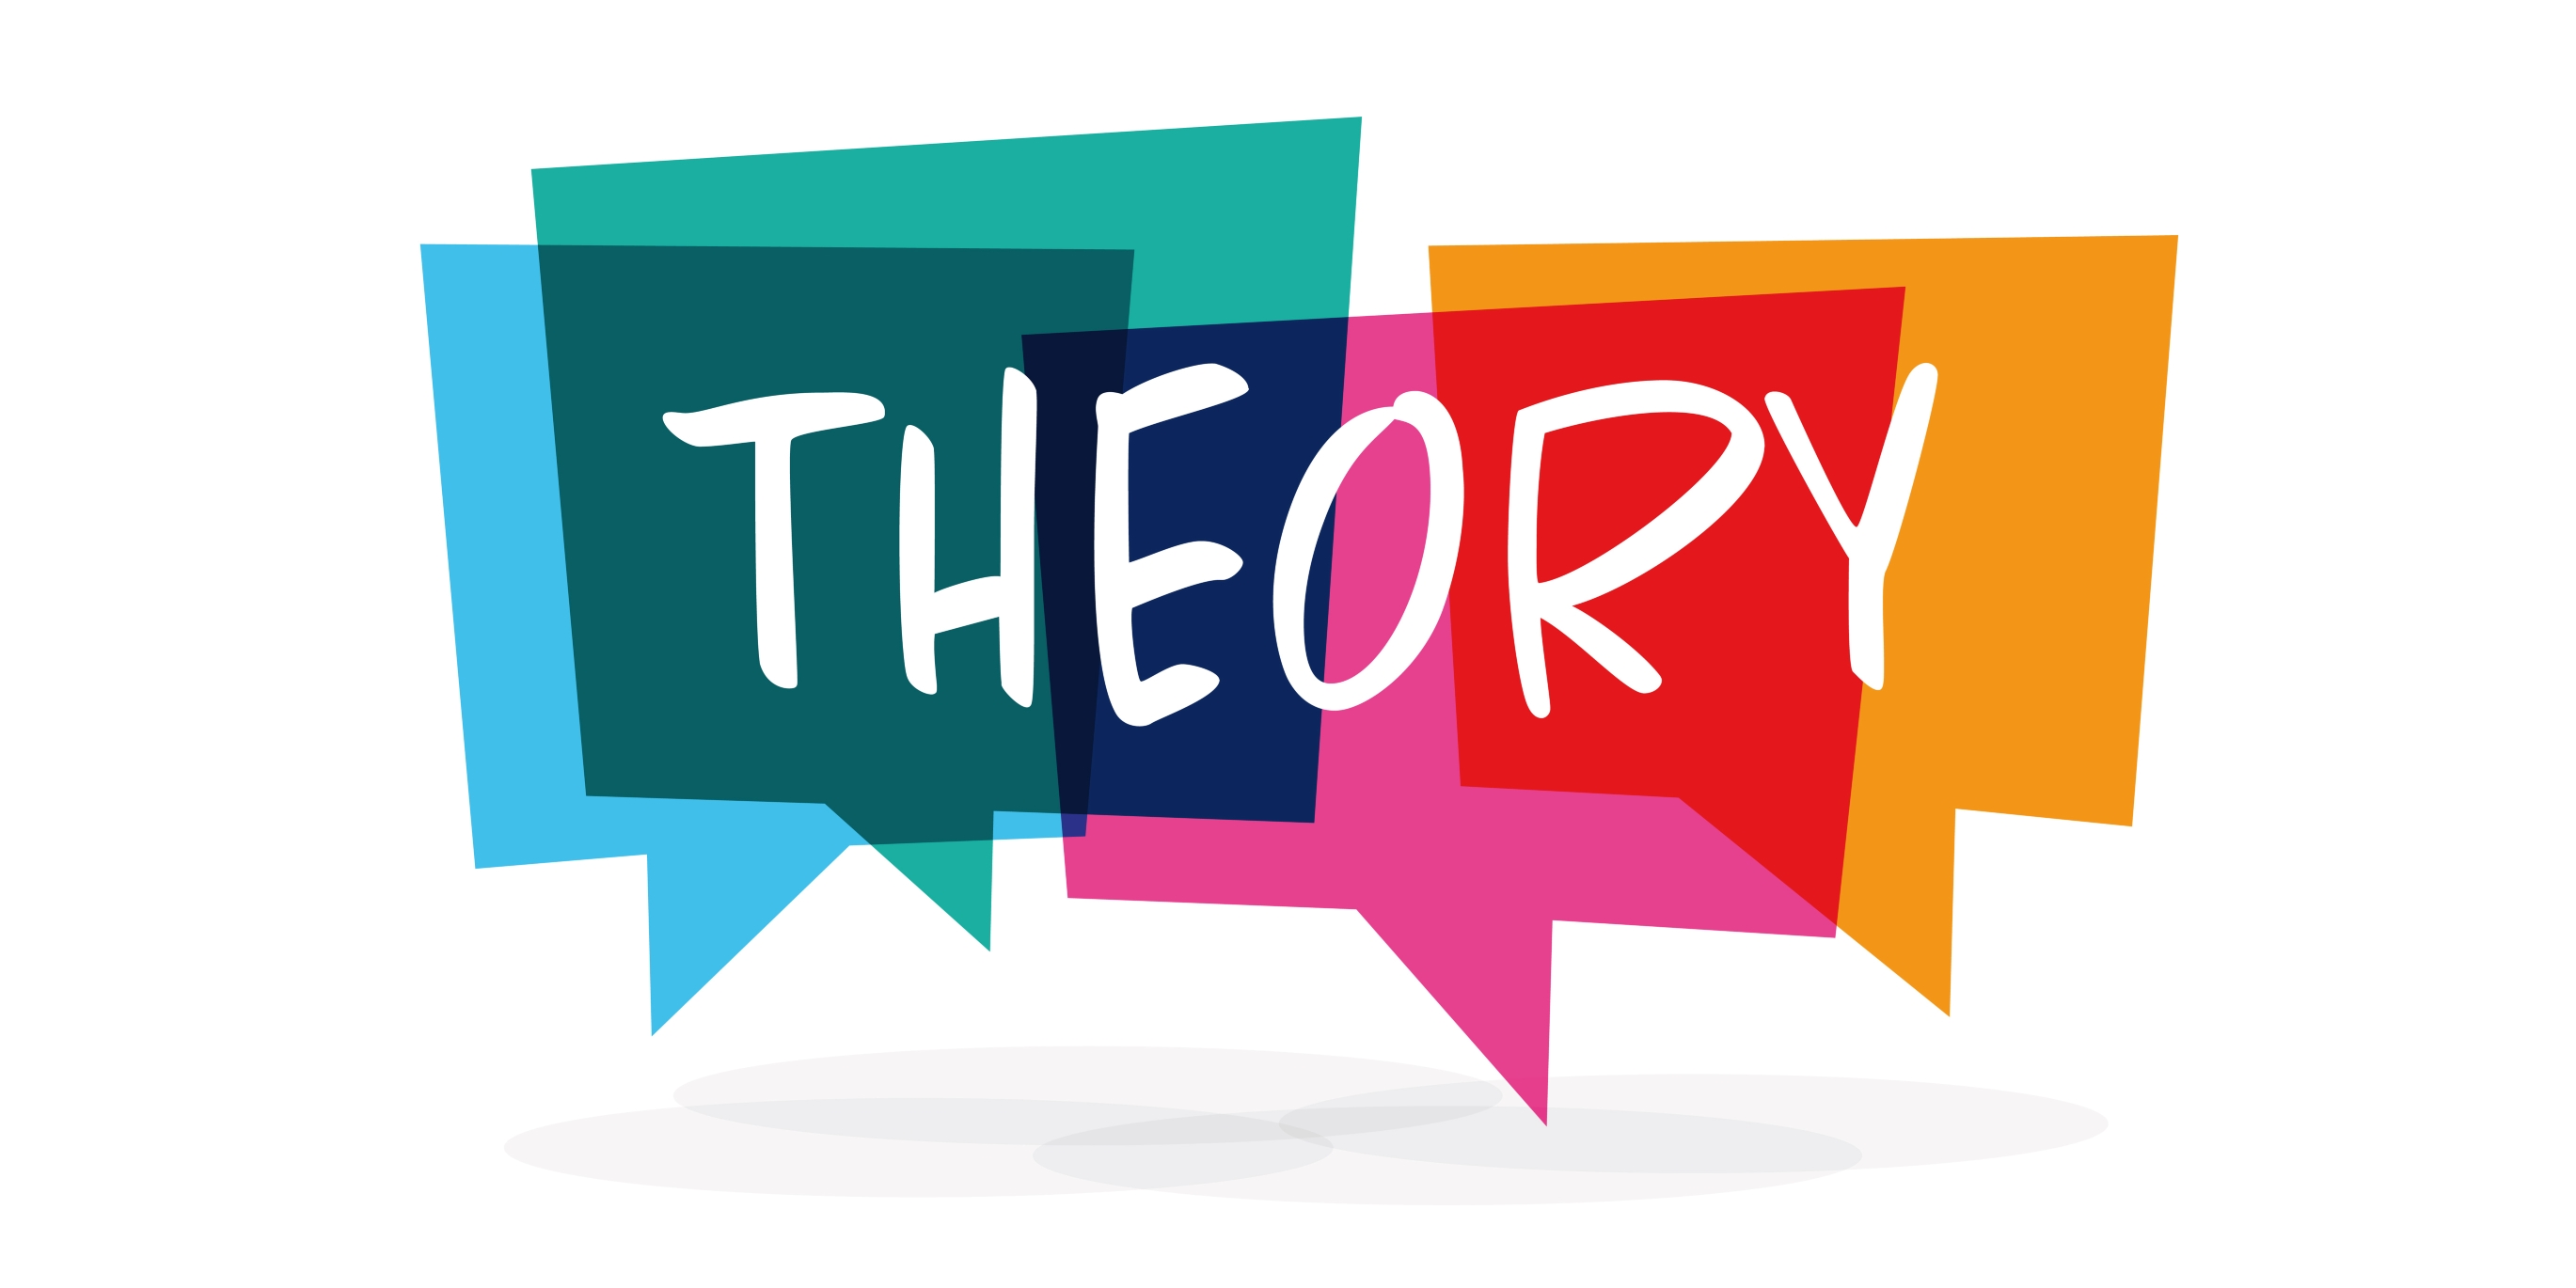 Theory 1